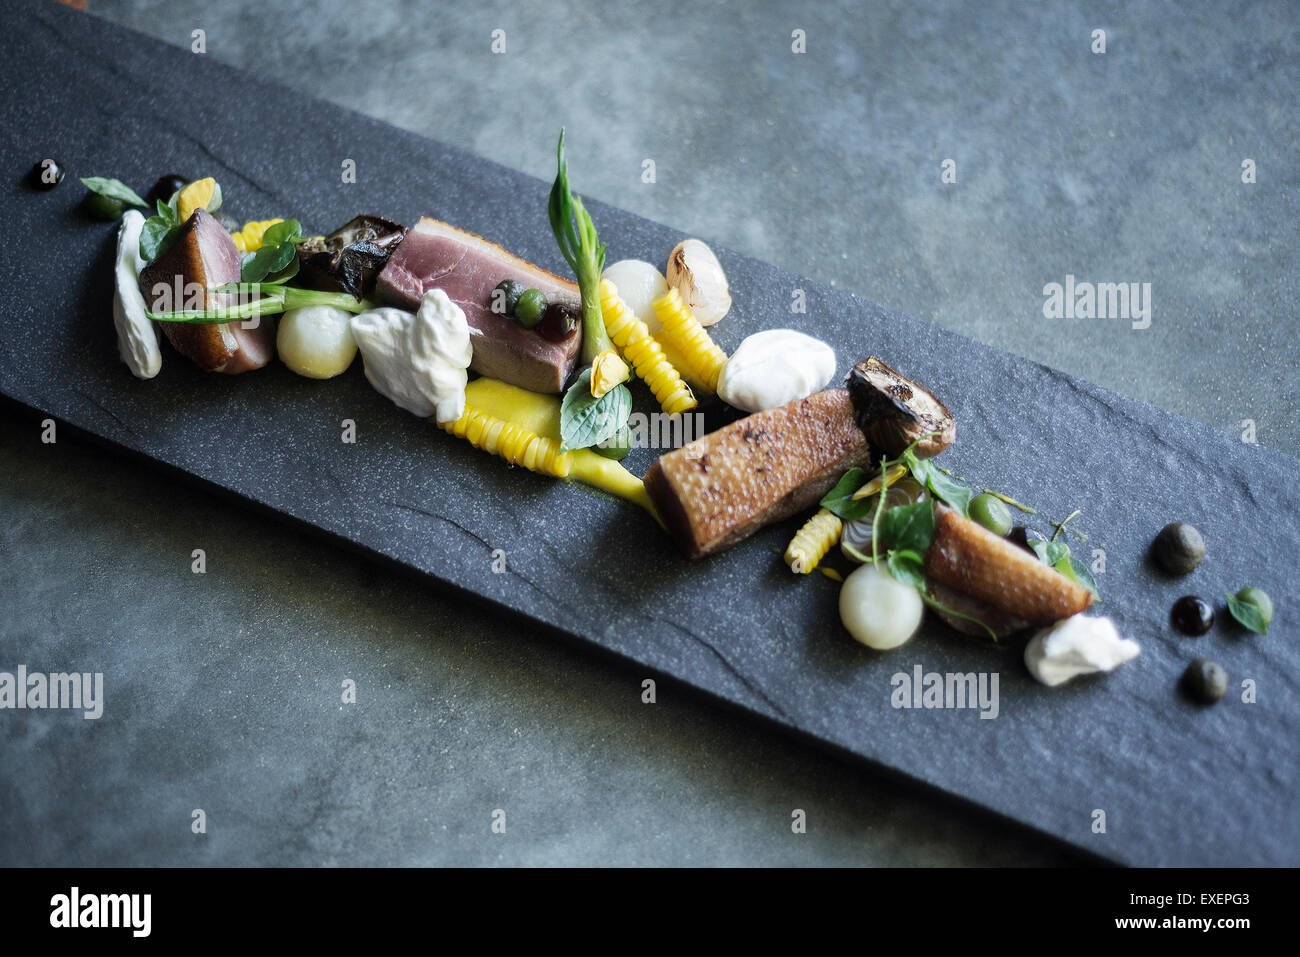 gourmet cuisine pork vegetables and sour cream Stock Photo